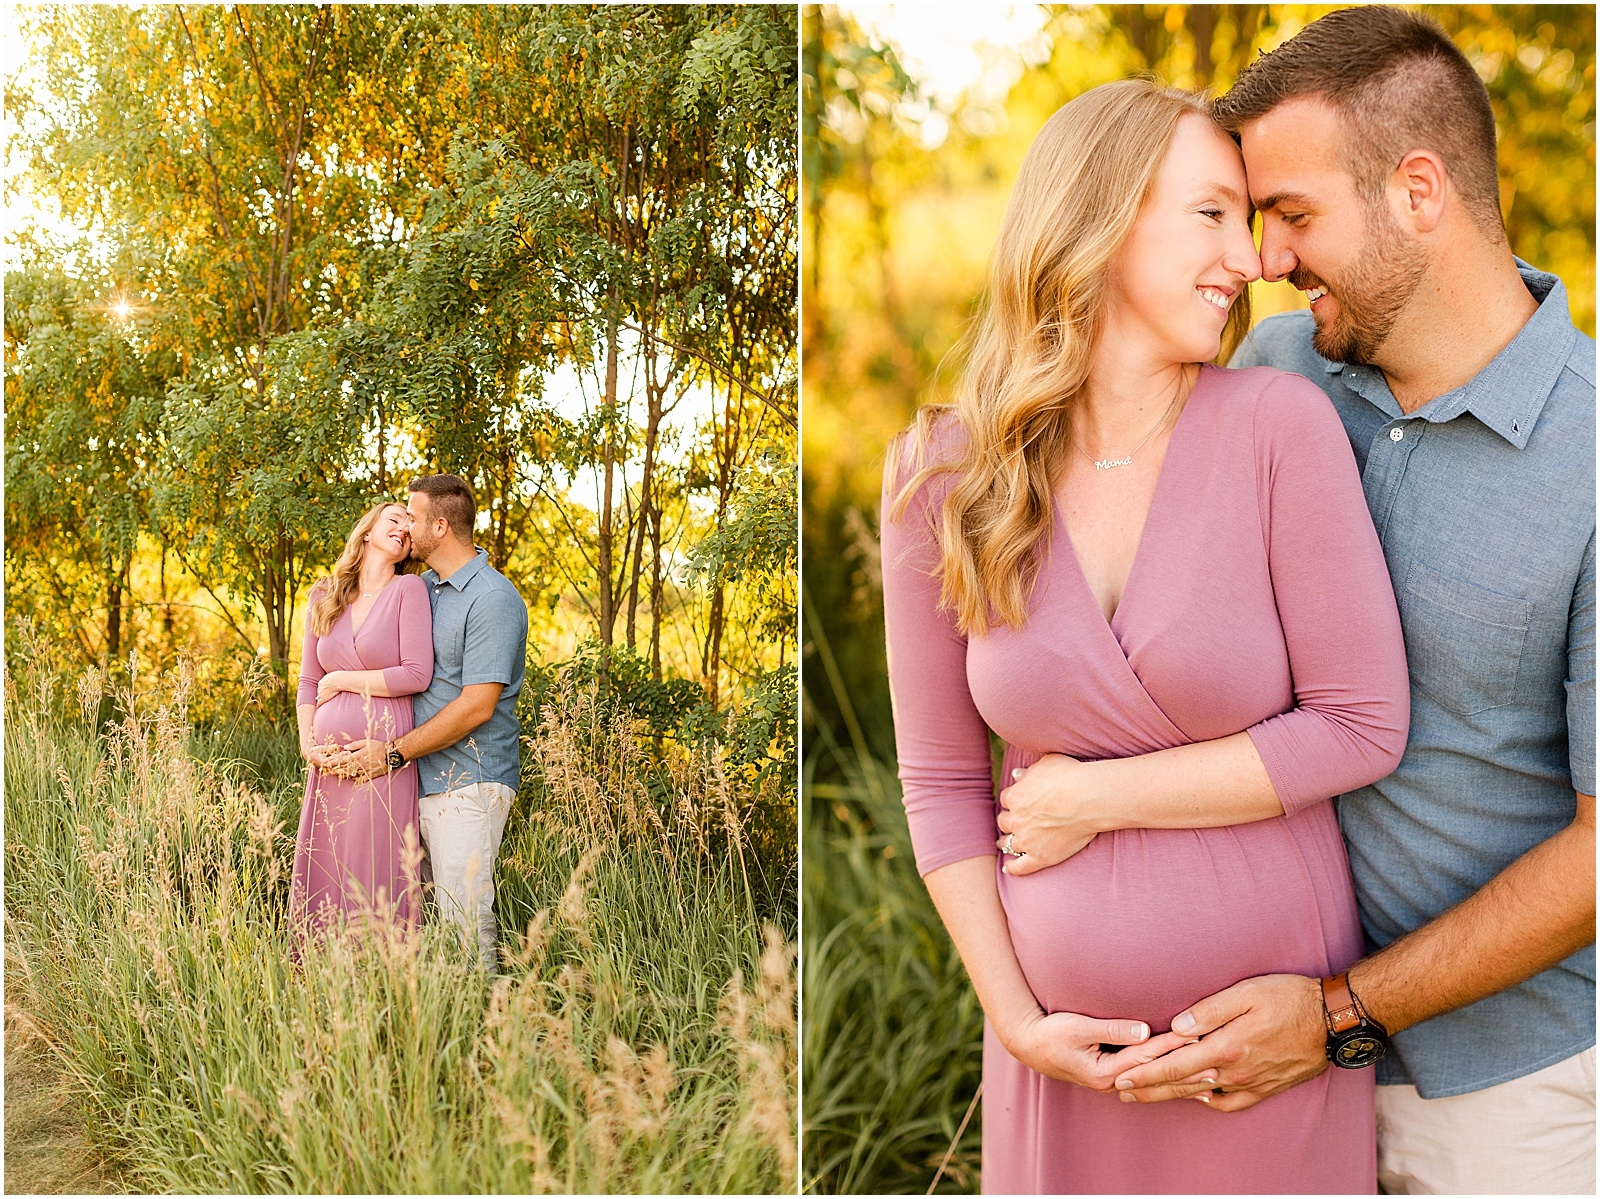 Ellen and Jake | Maternity Session Bret and Brandie | Evansville Photographers | @bretandbrandie-0015.jpg